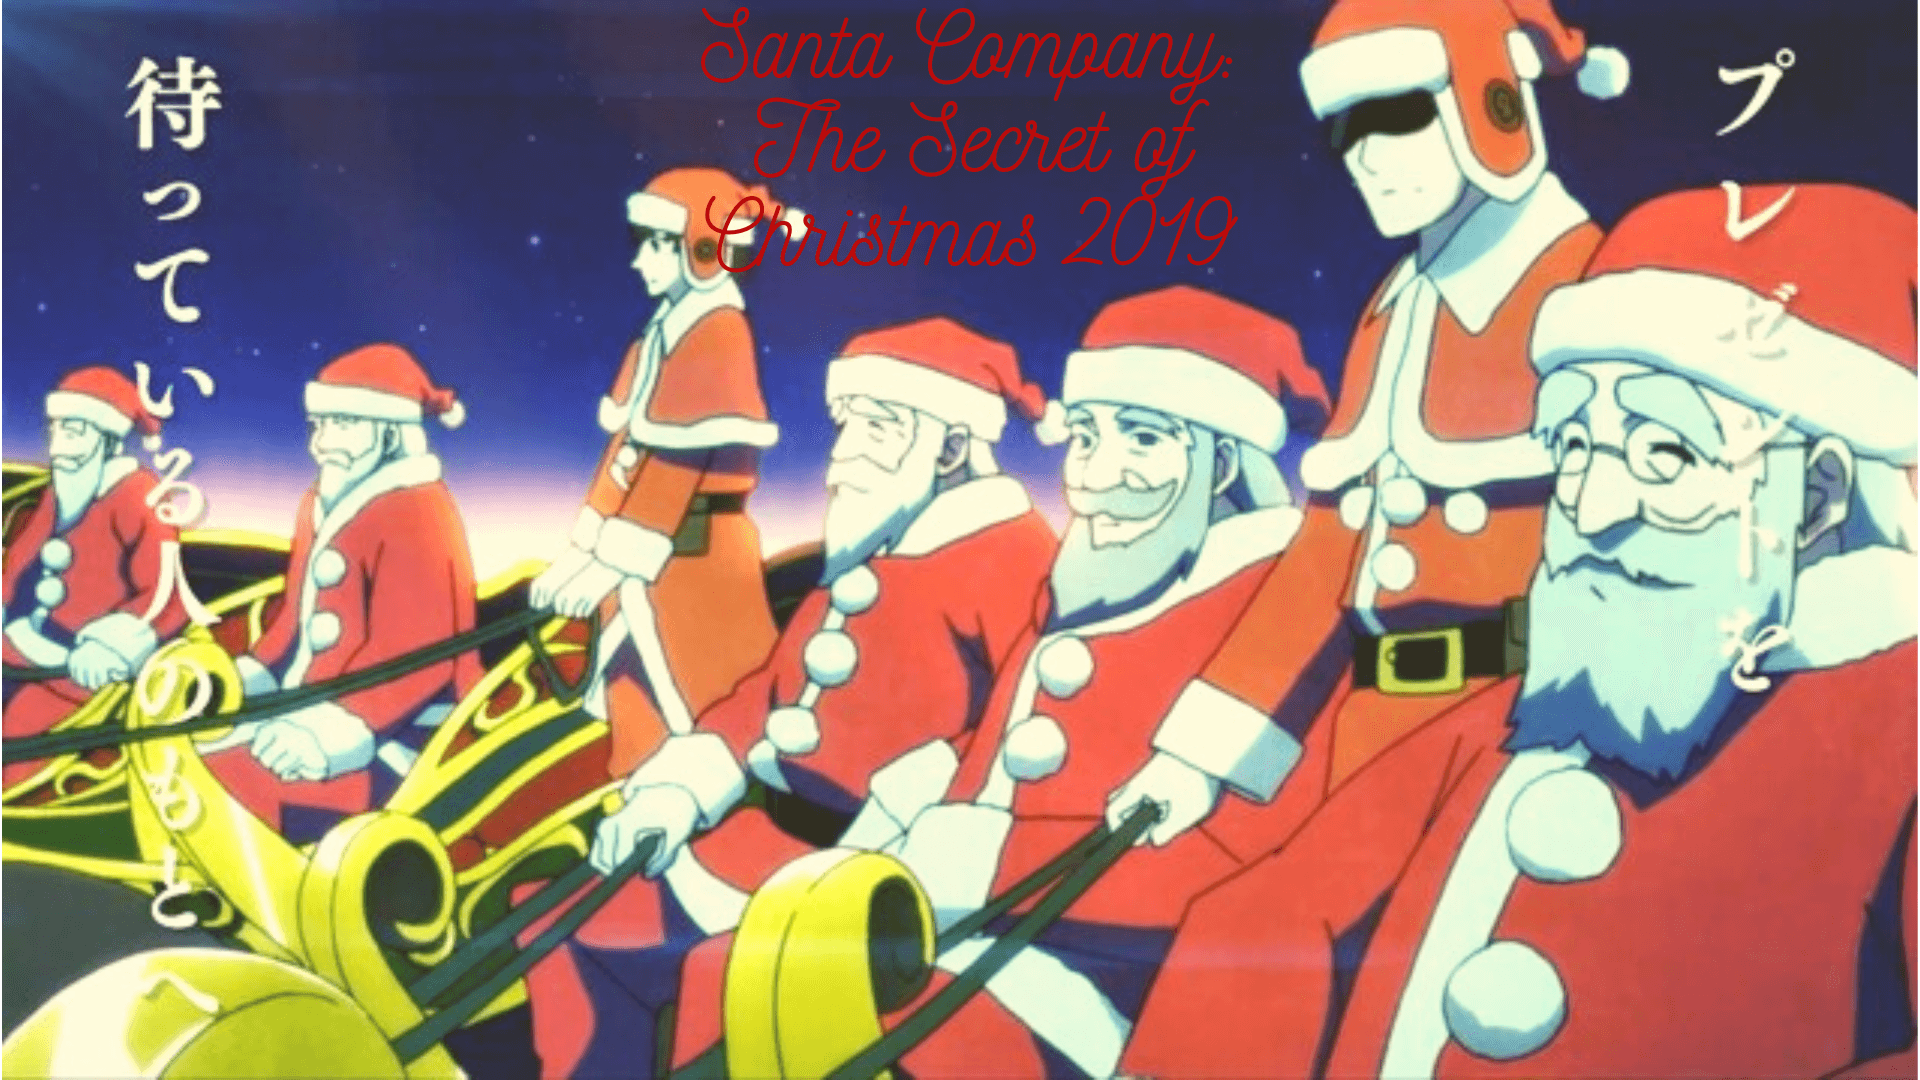 Santa Company The Secret Of Christmas 2019 -The Top 10 Christmas Anime To Watch This Holiday Season